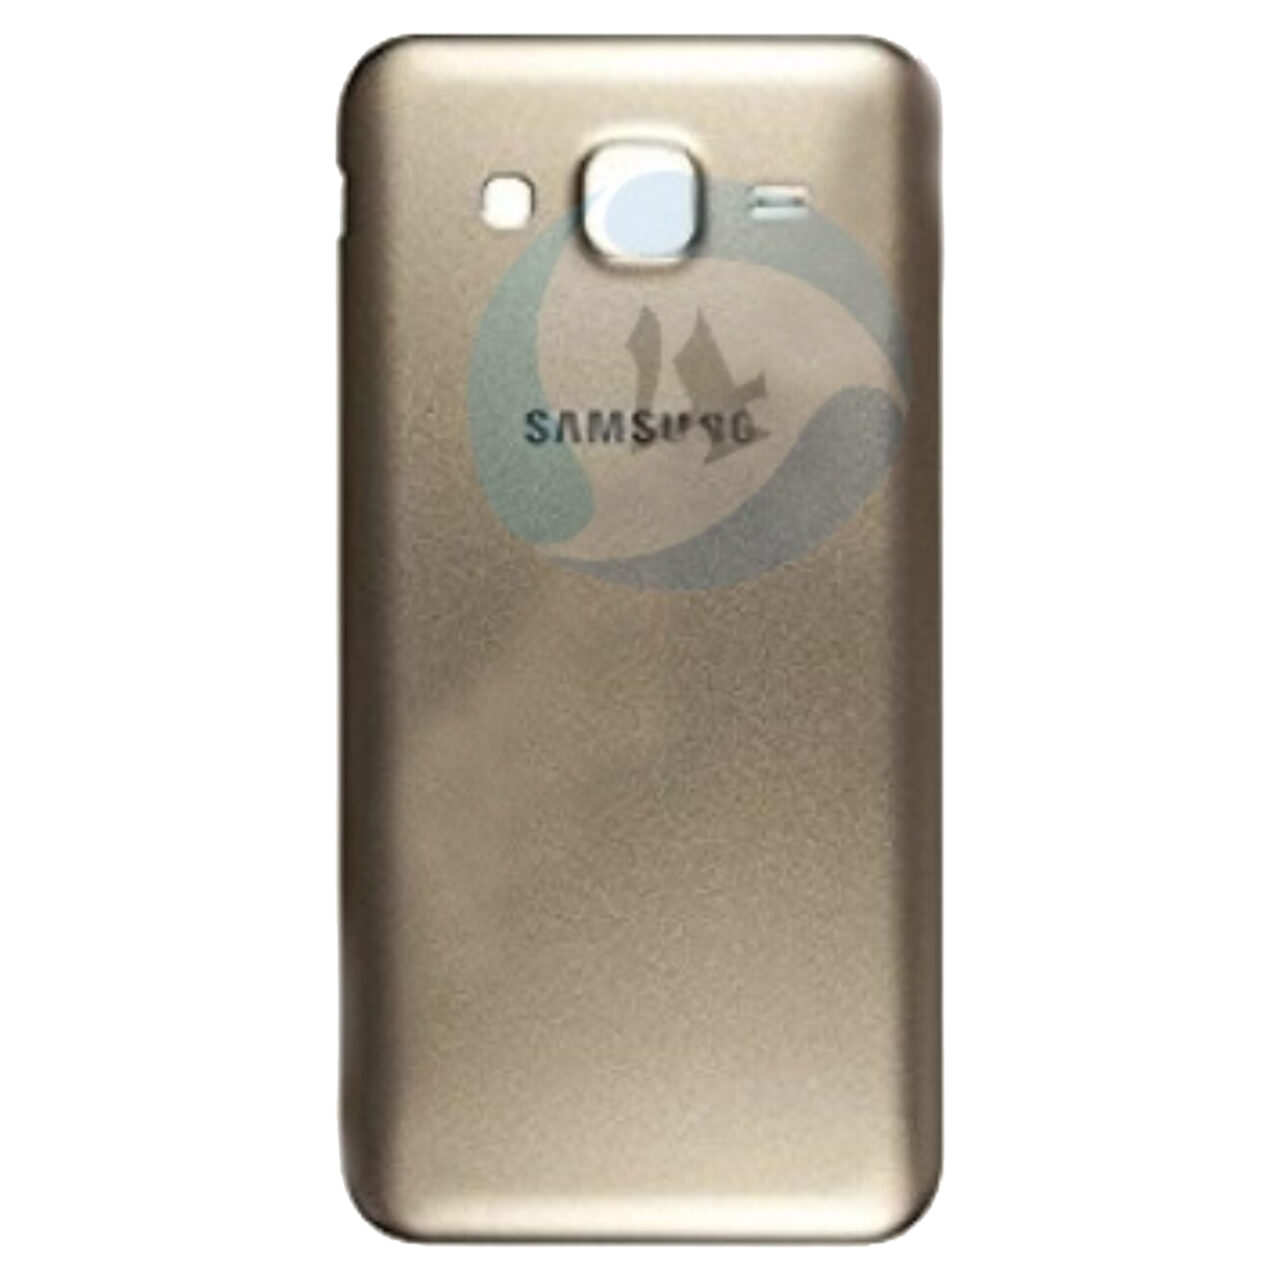 Samsung Galaxy J7 SM J700 F Backcover batterij cover gold